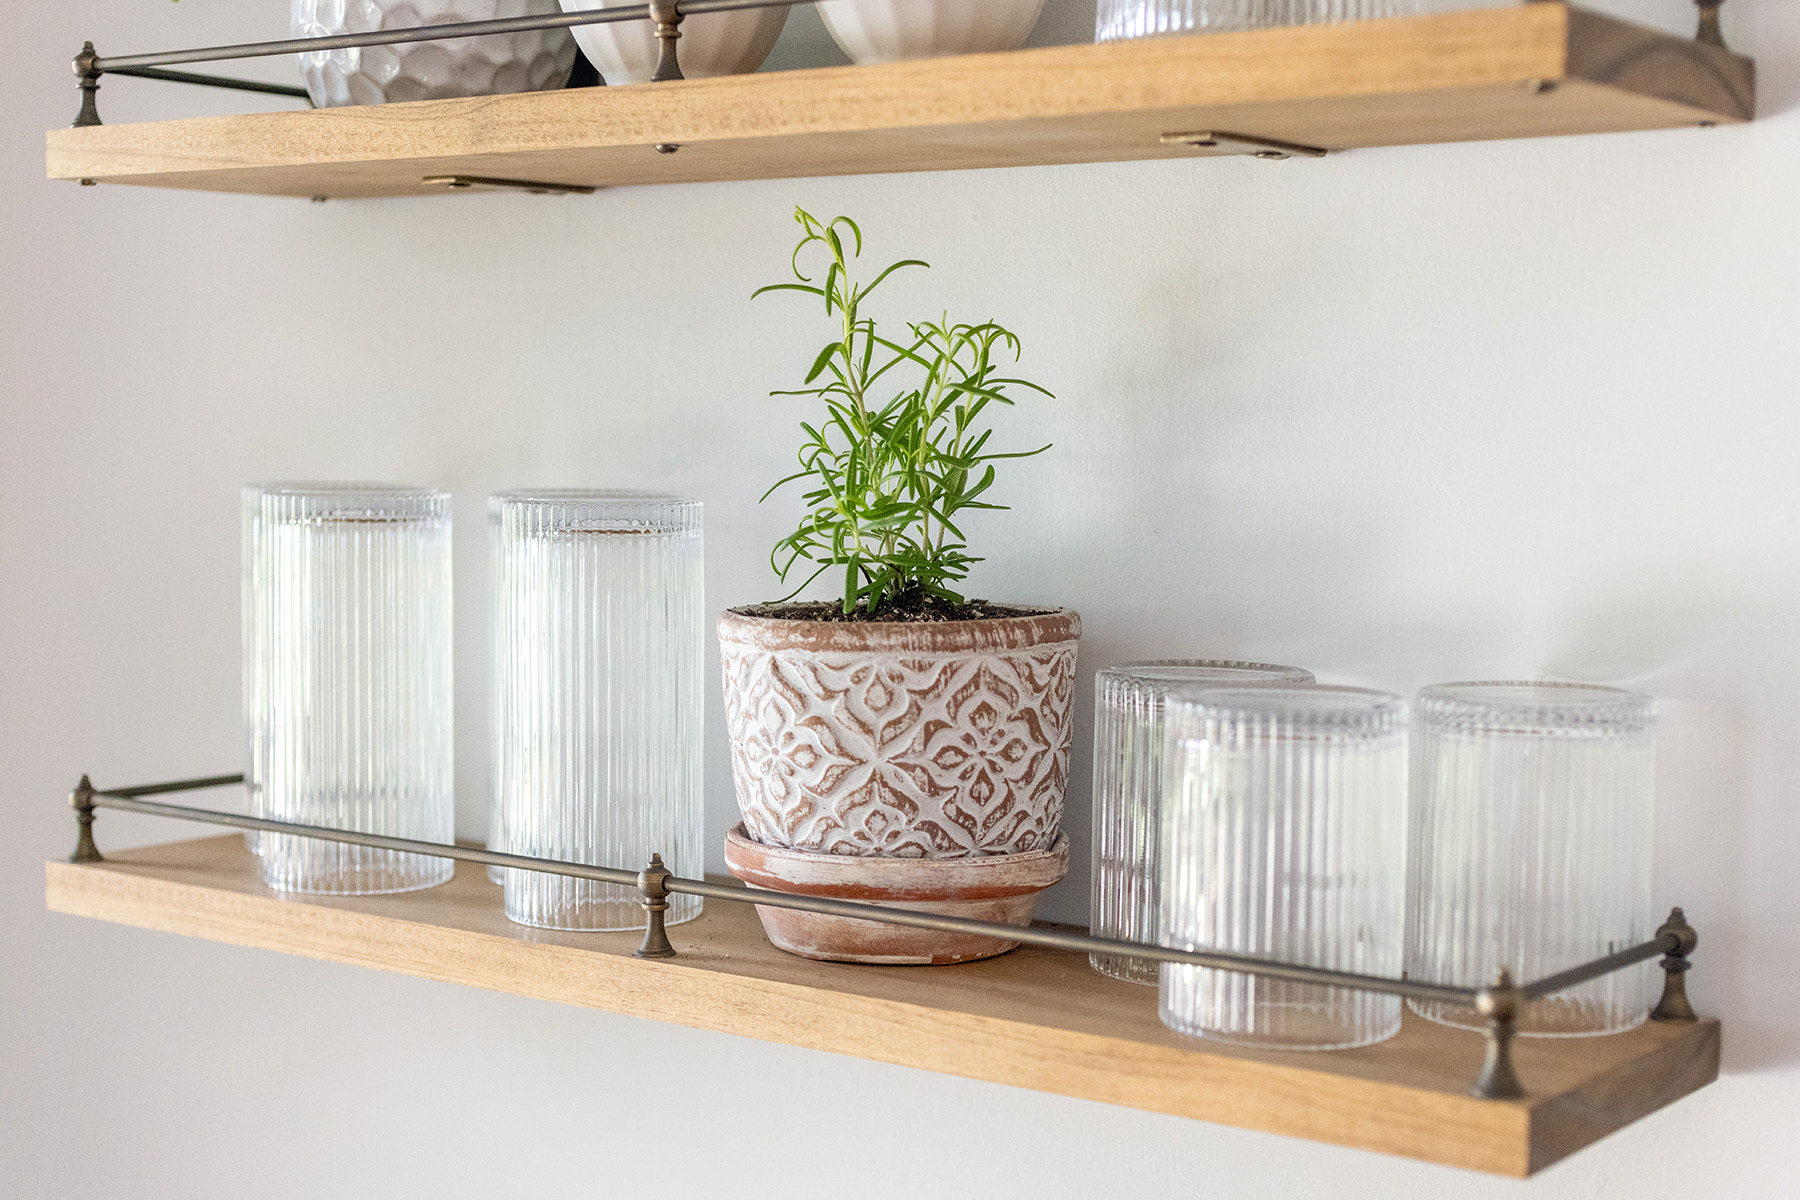 Kitchen Shelves | Spring Display